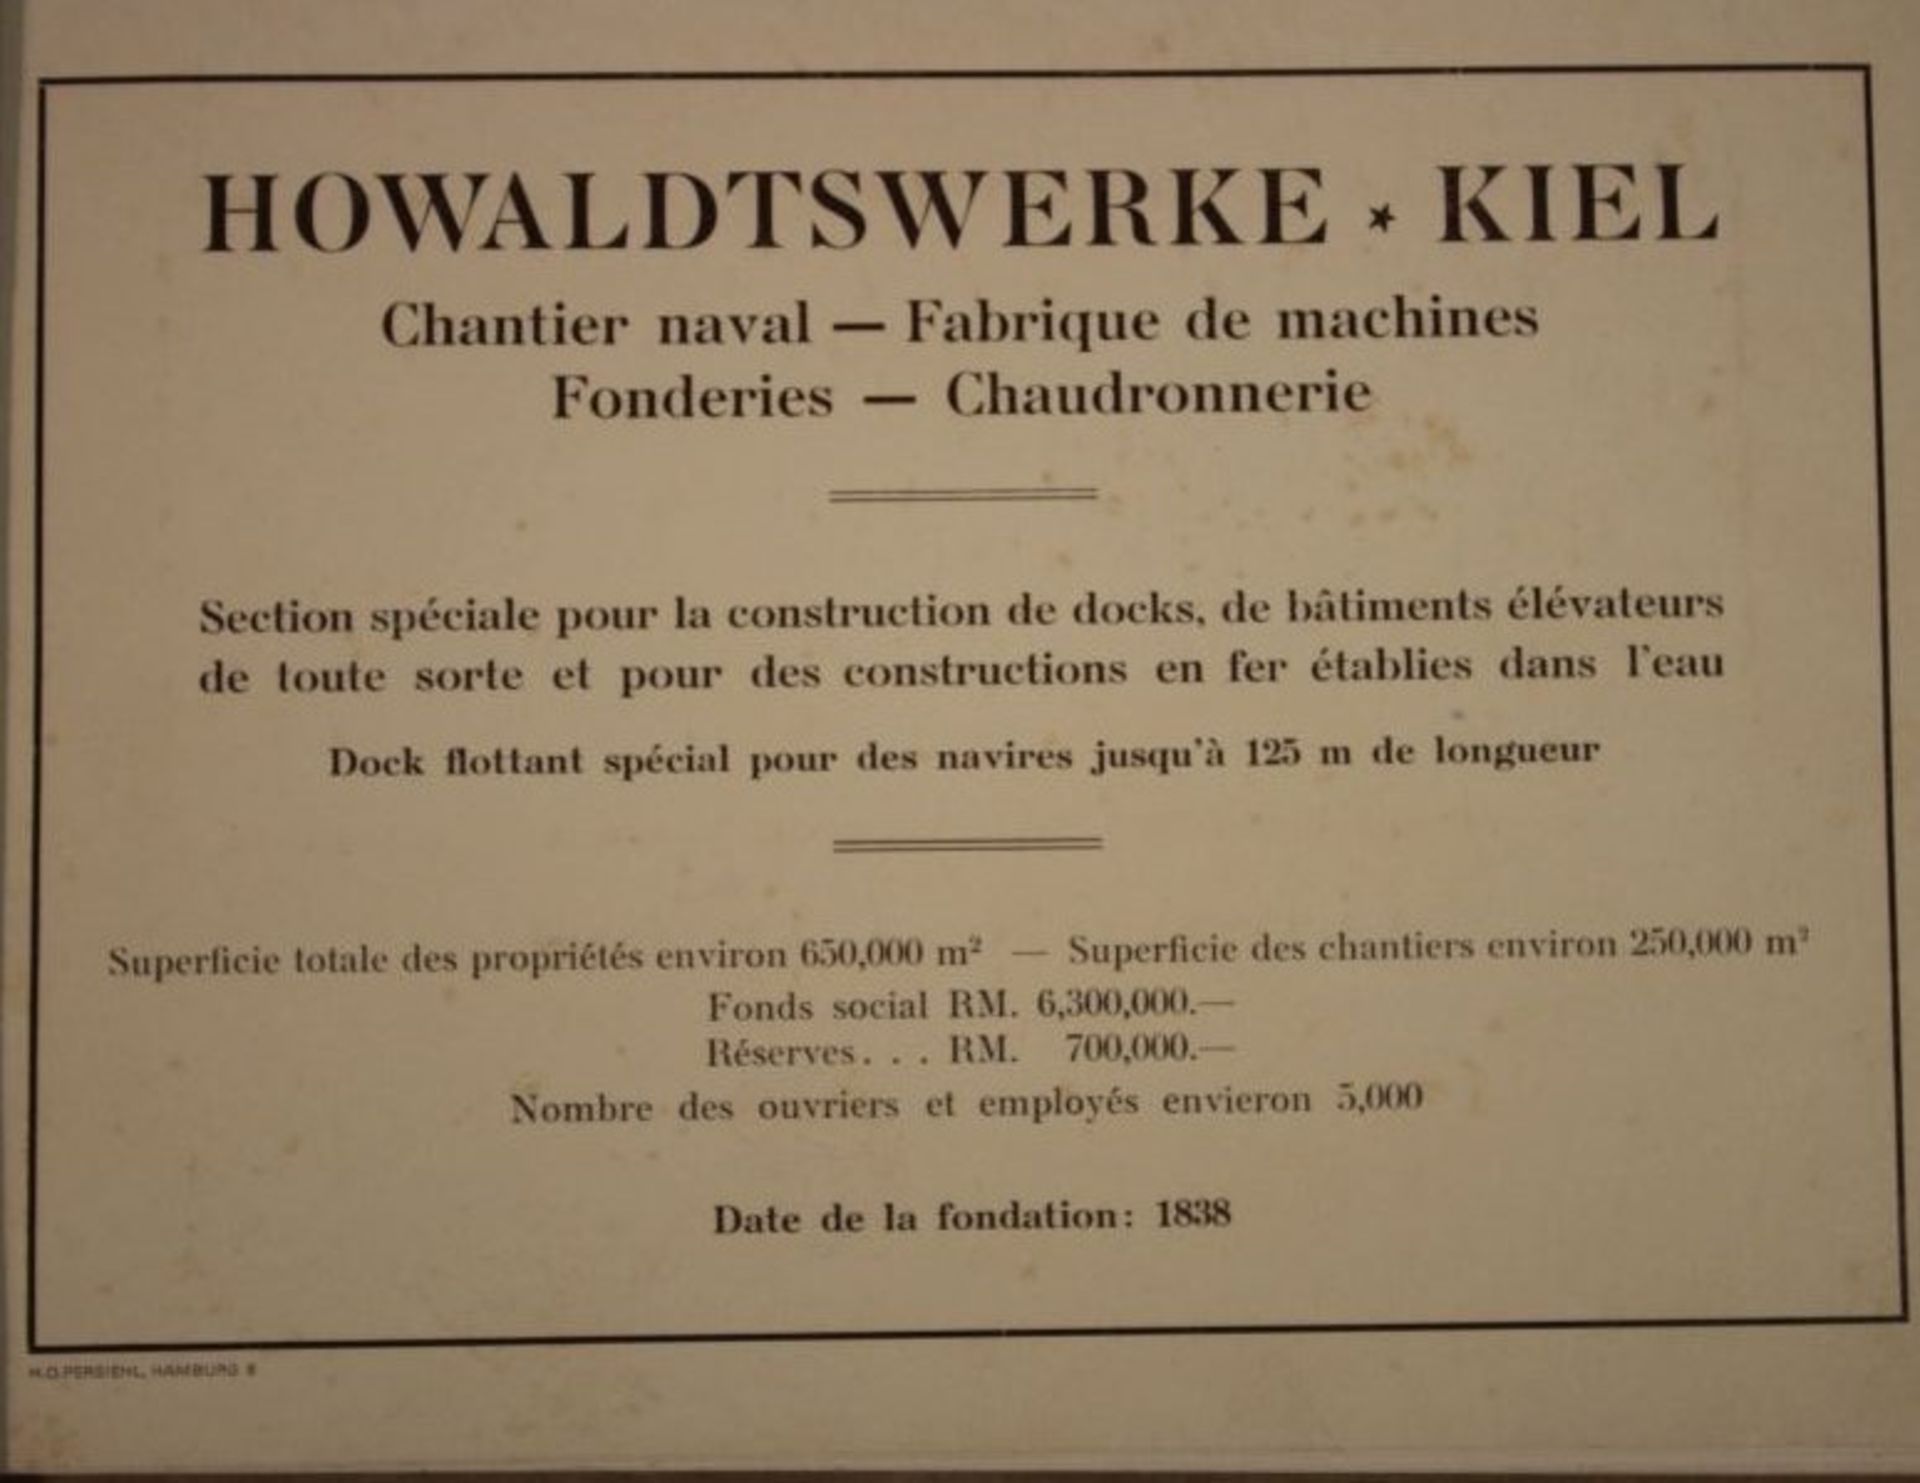 Bildband "Howaldtswerke Kiel" um 1900, in franz. Sprache. - Bild 2 aus 4